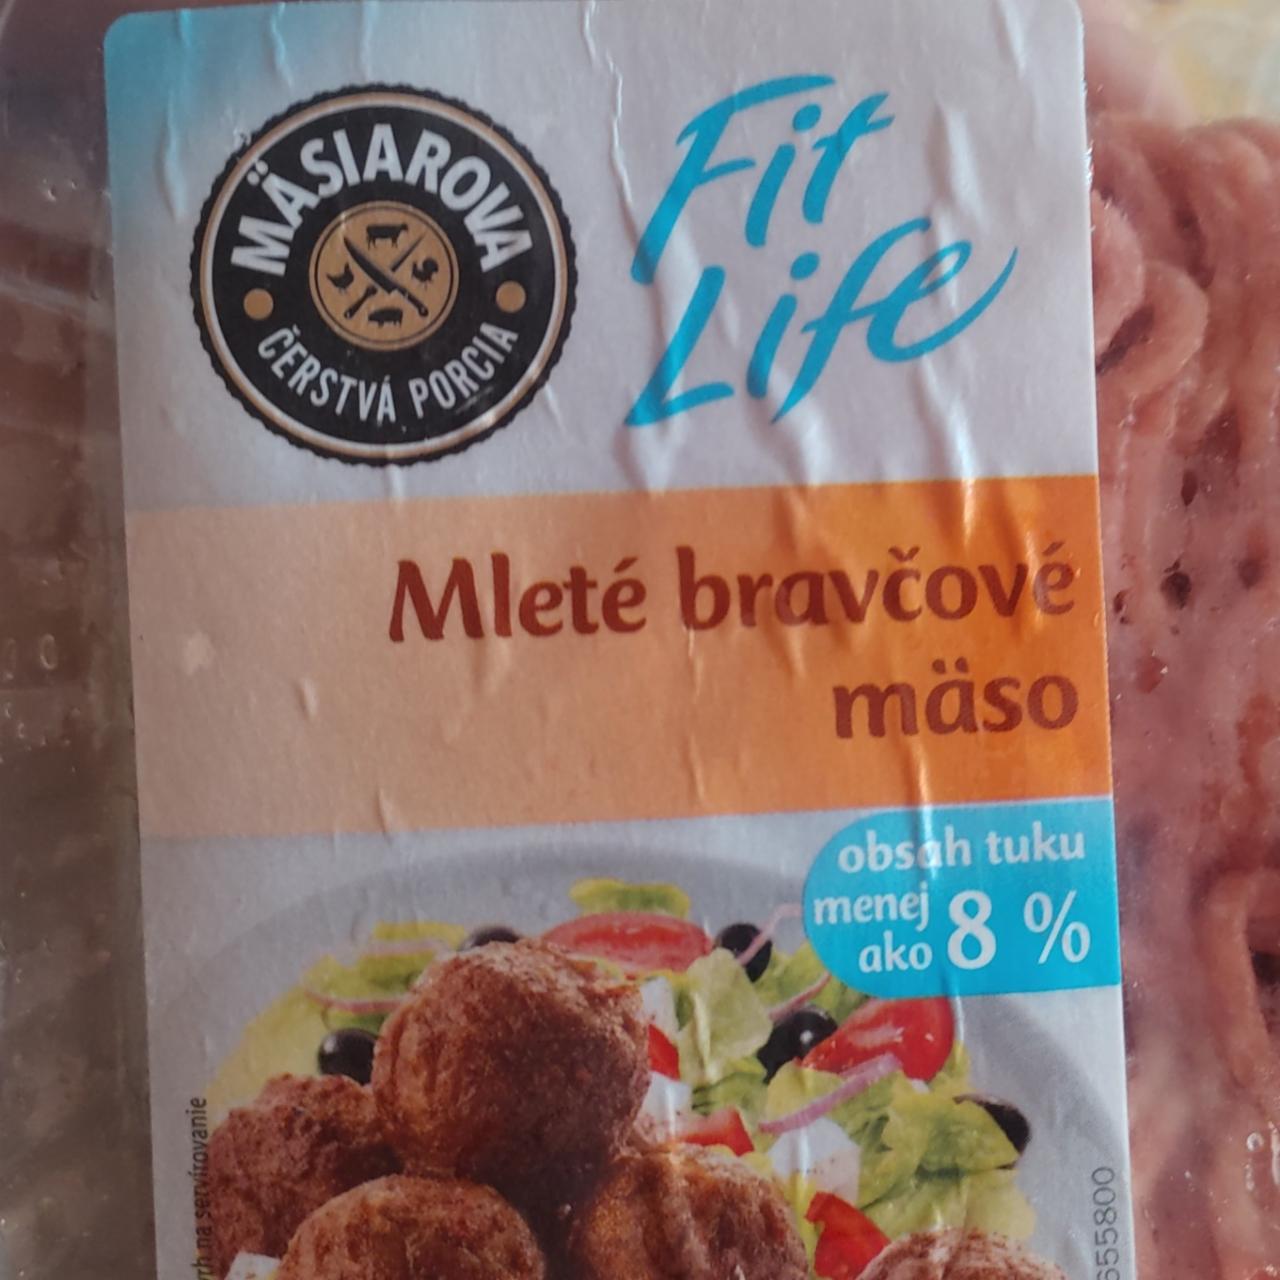 Képek - Fit life mleté bravčové mäso 8%